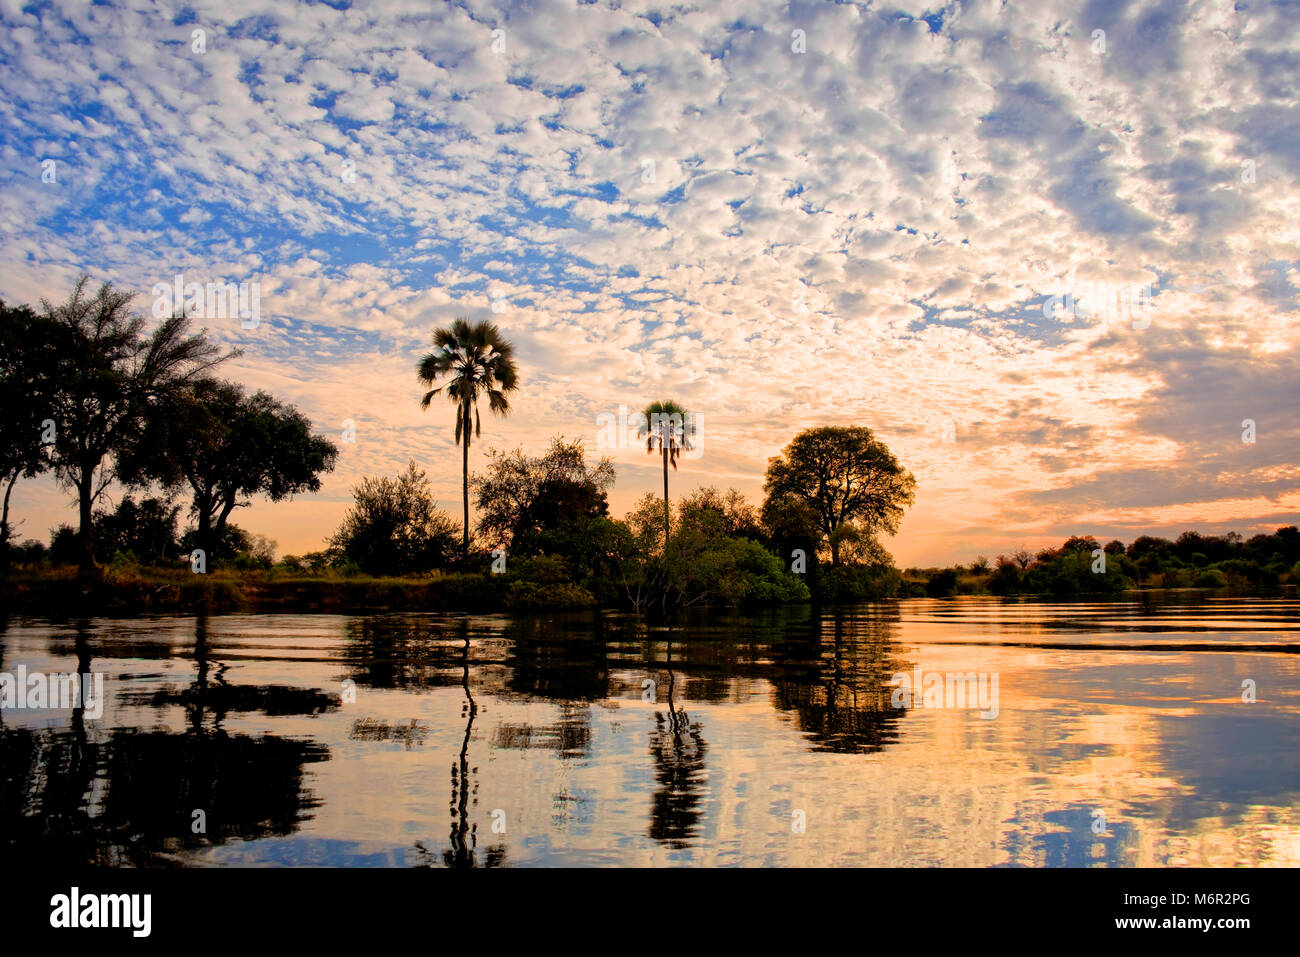 Die zambeze River bei Sonnenuntergang, Sambia Stockfoto